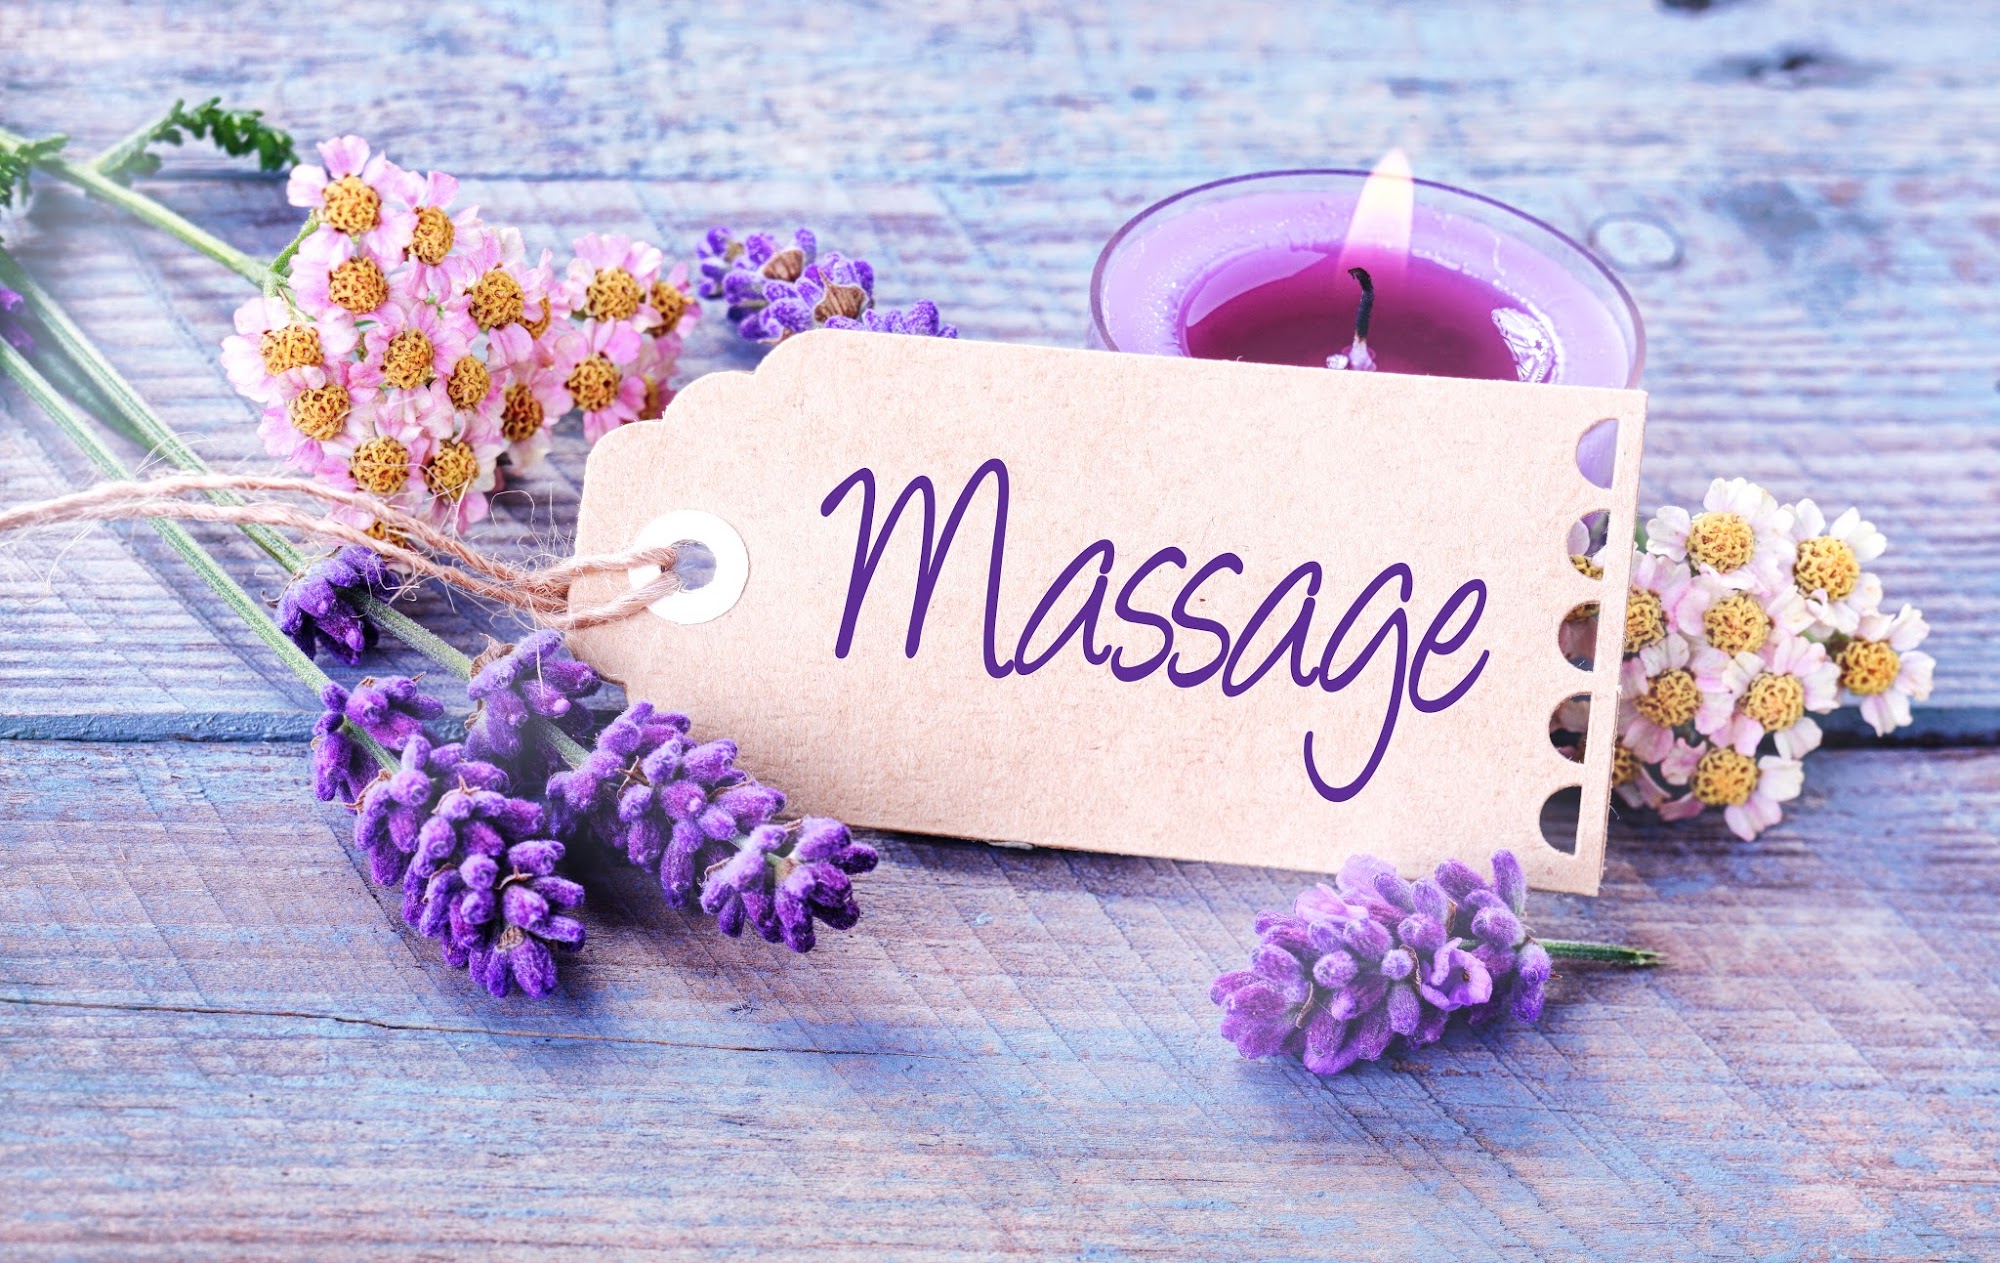 Unwind Wellness and Massage